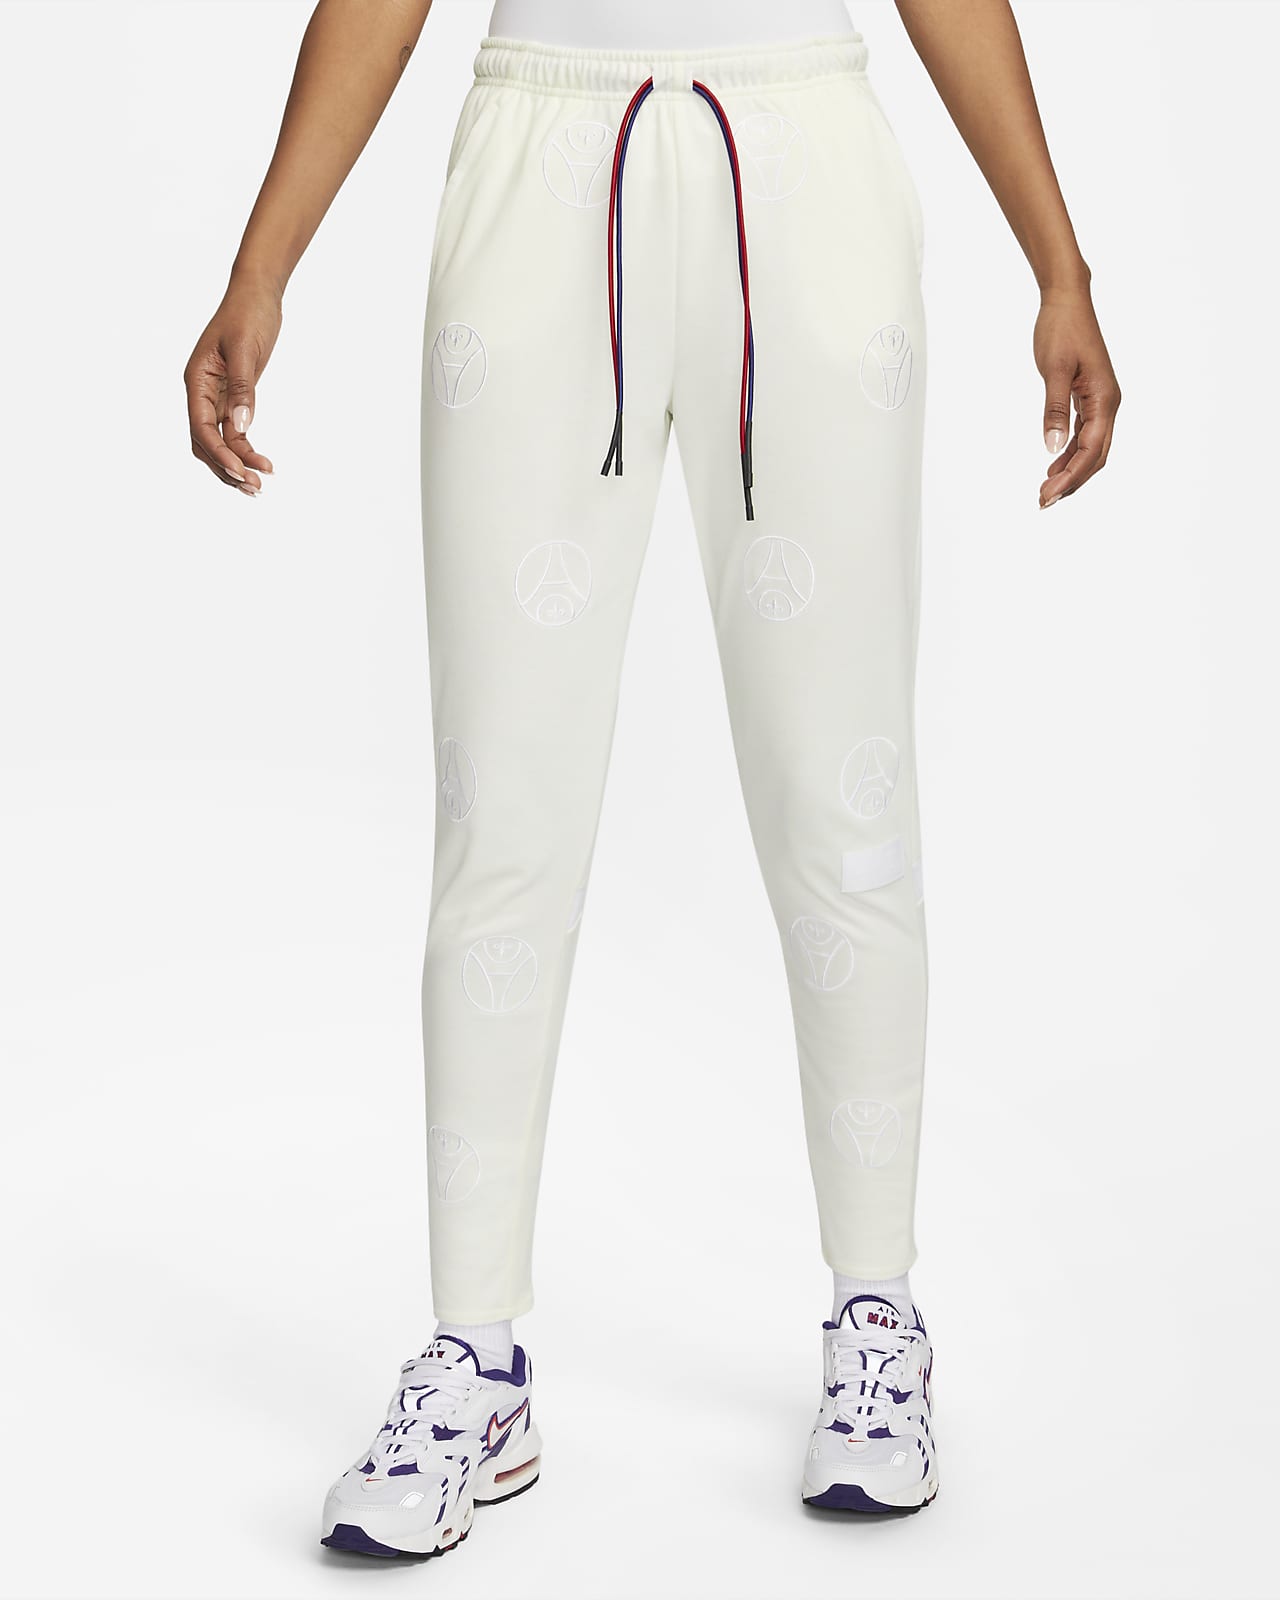 Paris Women's Nike Dri-FIT Travel Soccer Pants.